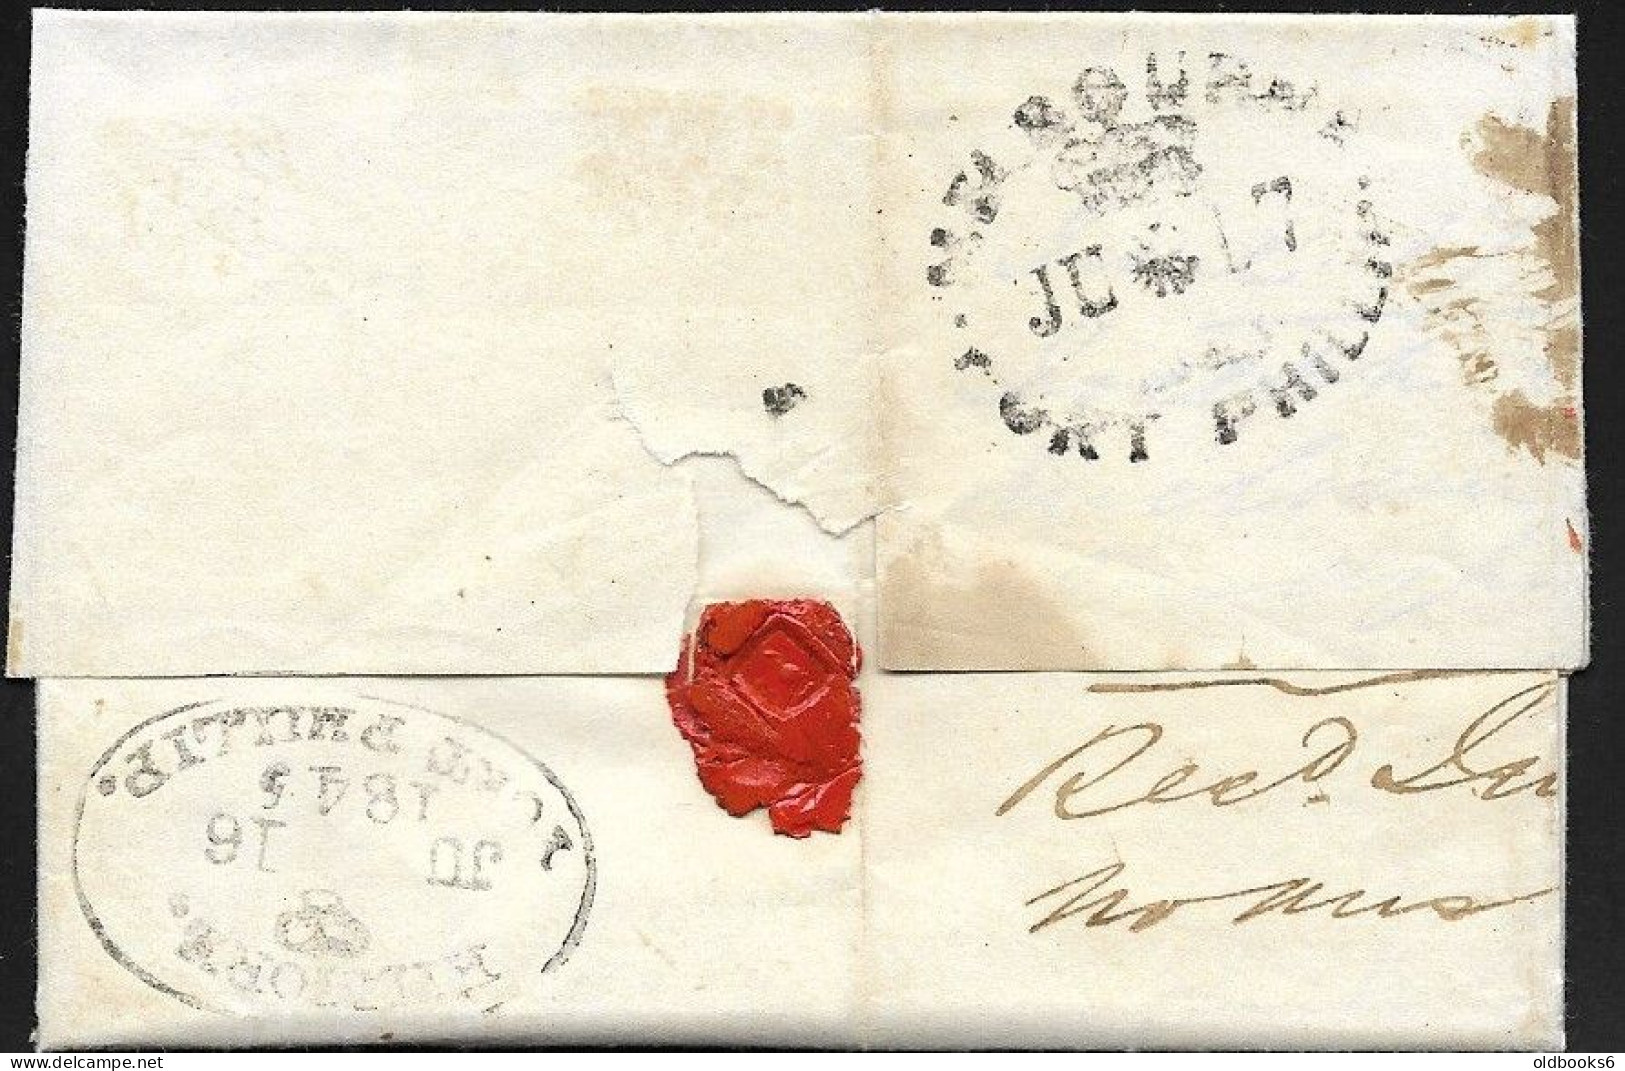 AUSTRALIA NEW SOUTH WALES 1845, PAID AT KILMORE Regist.Letter To Melbourne VF - ...-1854 Prephilately